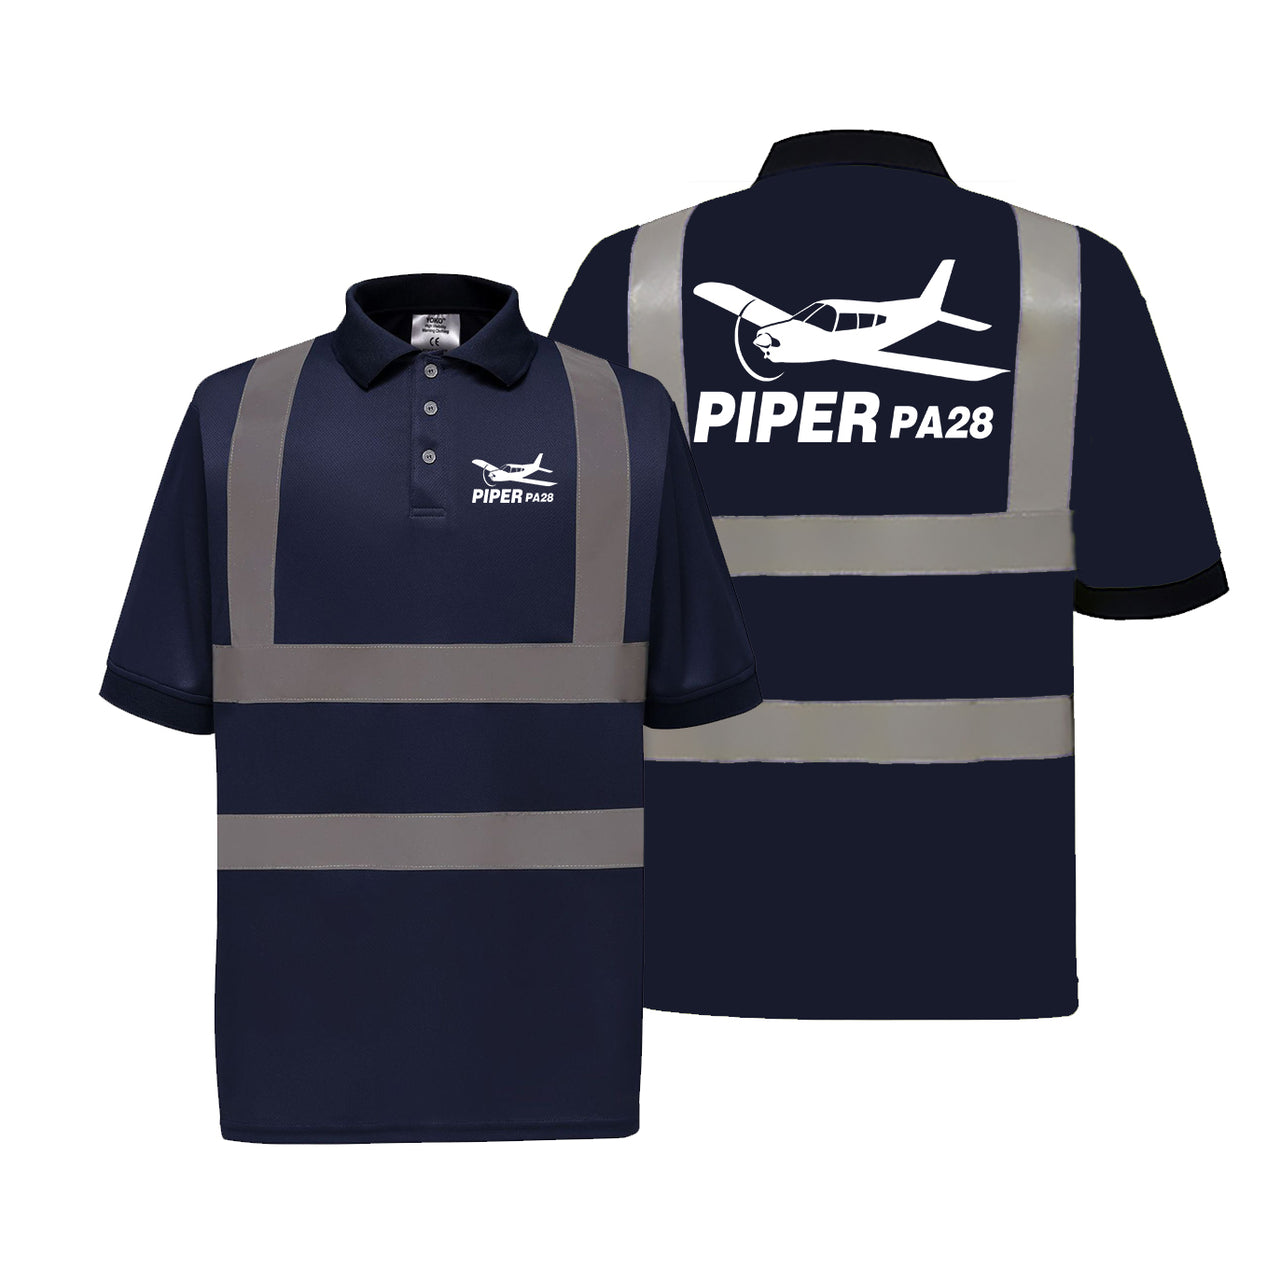 The Piper PA28 Designed Reflective Polo T-Shirts